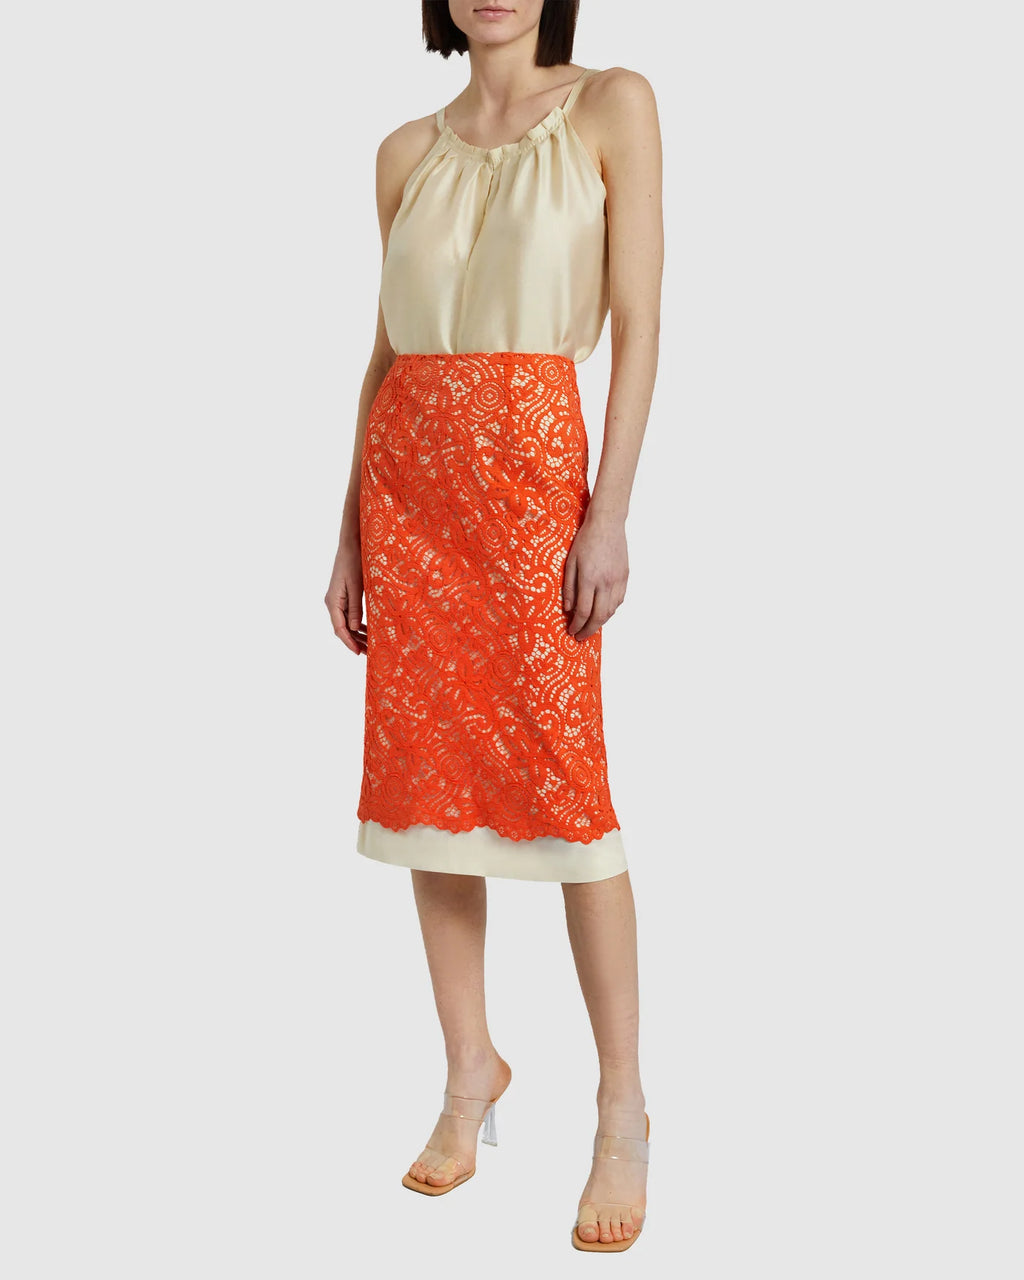 Orange lace pencil skirt